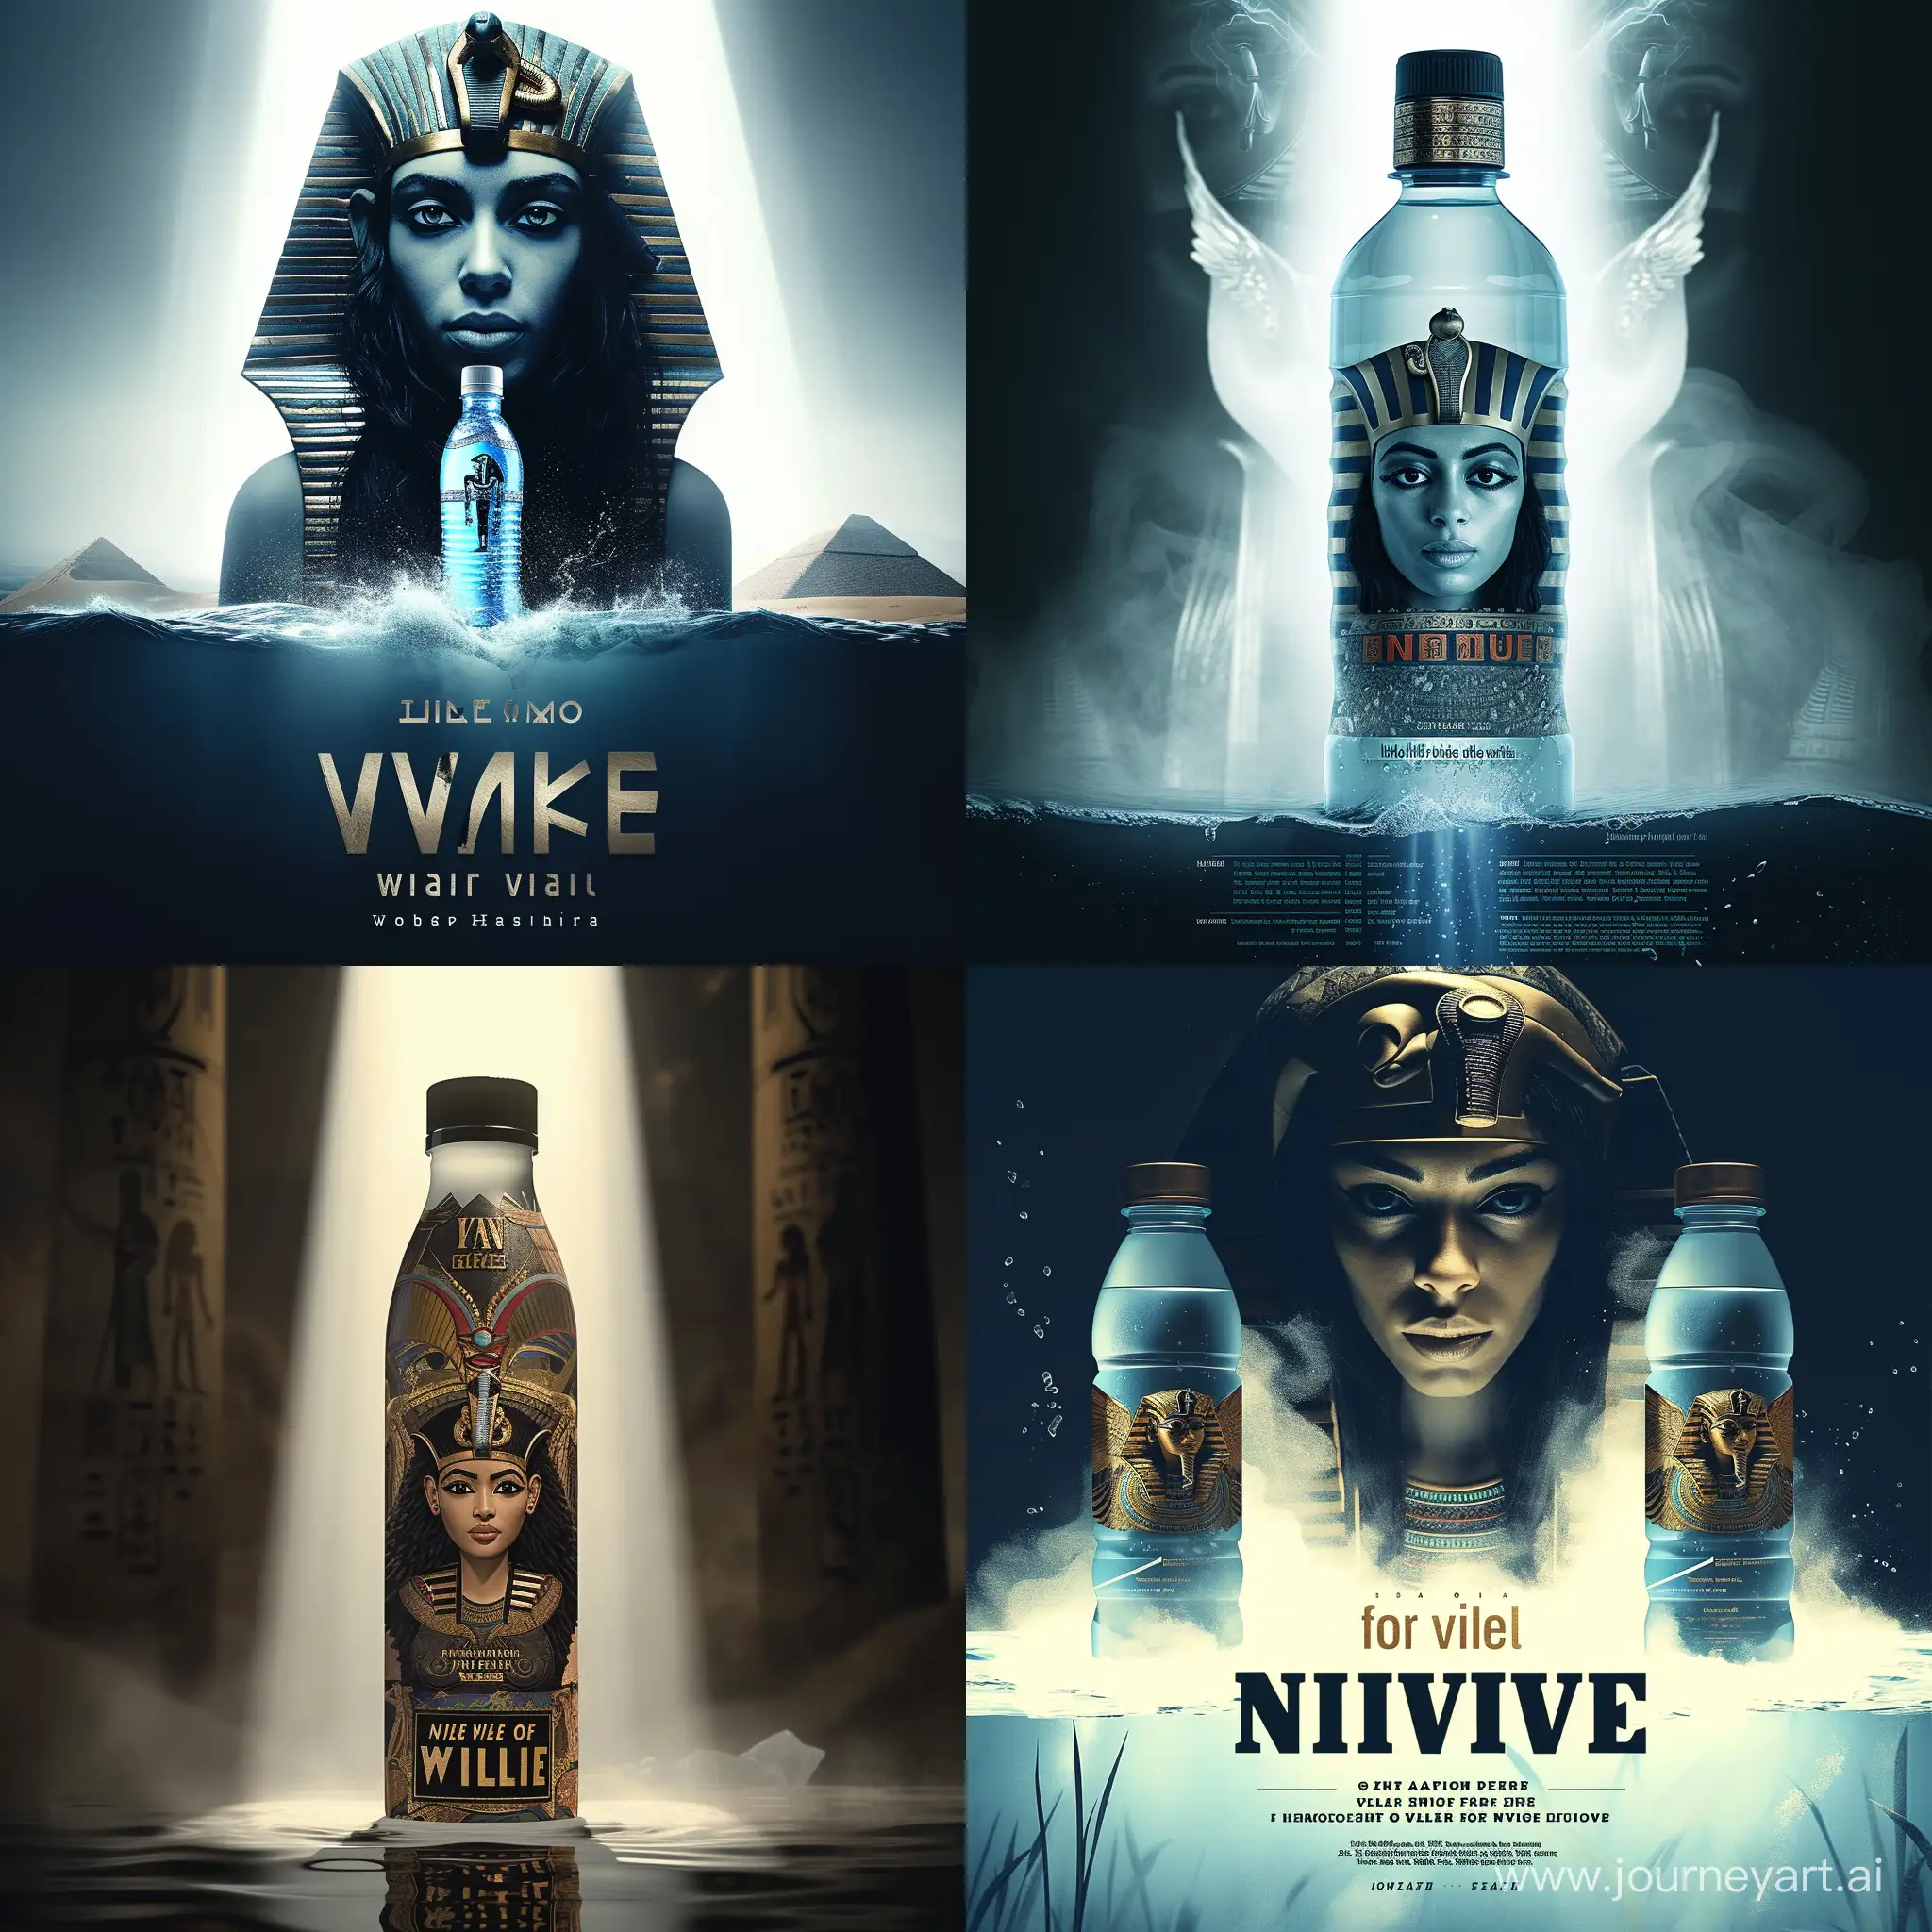 Pharaonic-Girl-in-Ancient-Egypt-Advertising-Nile-River-Water-Bottles